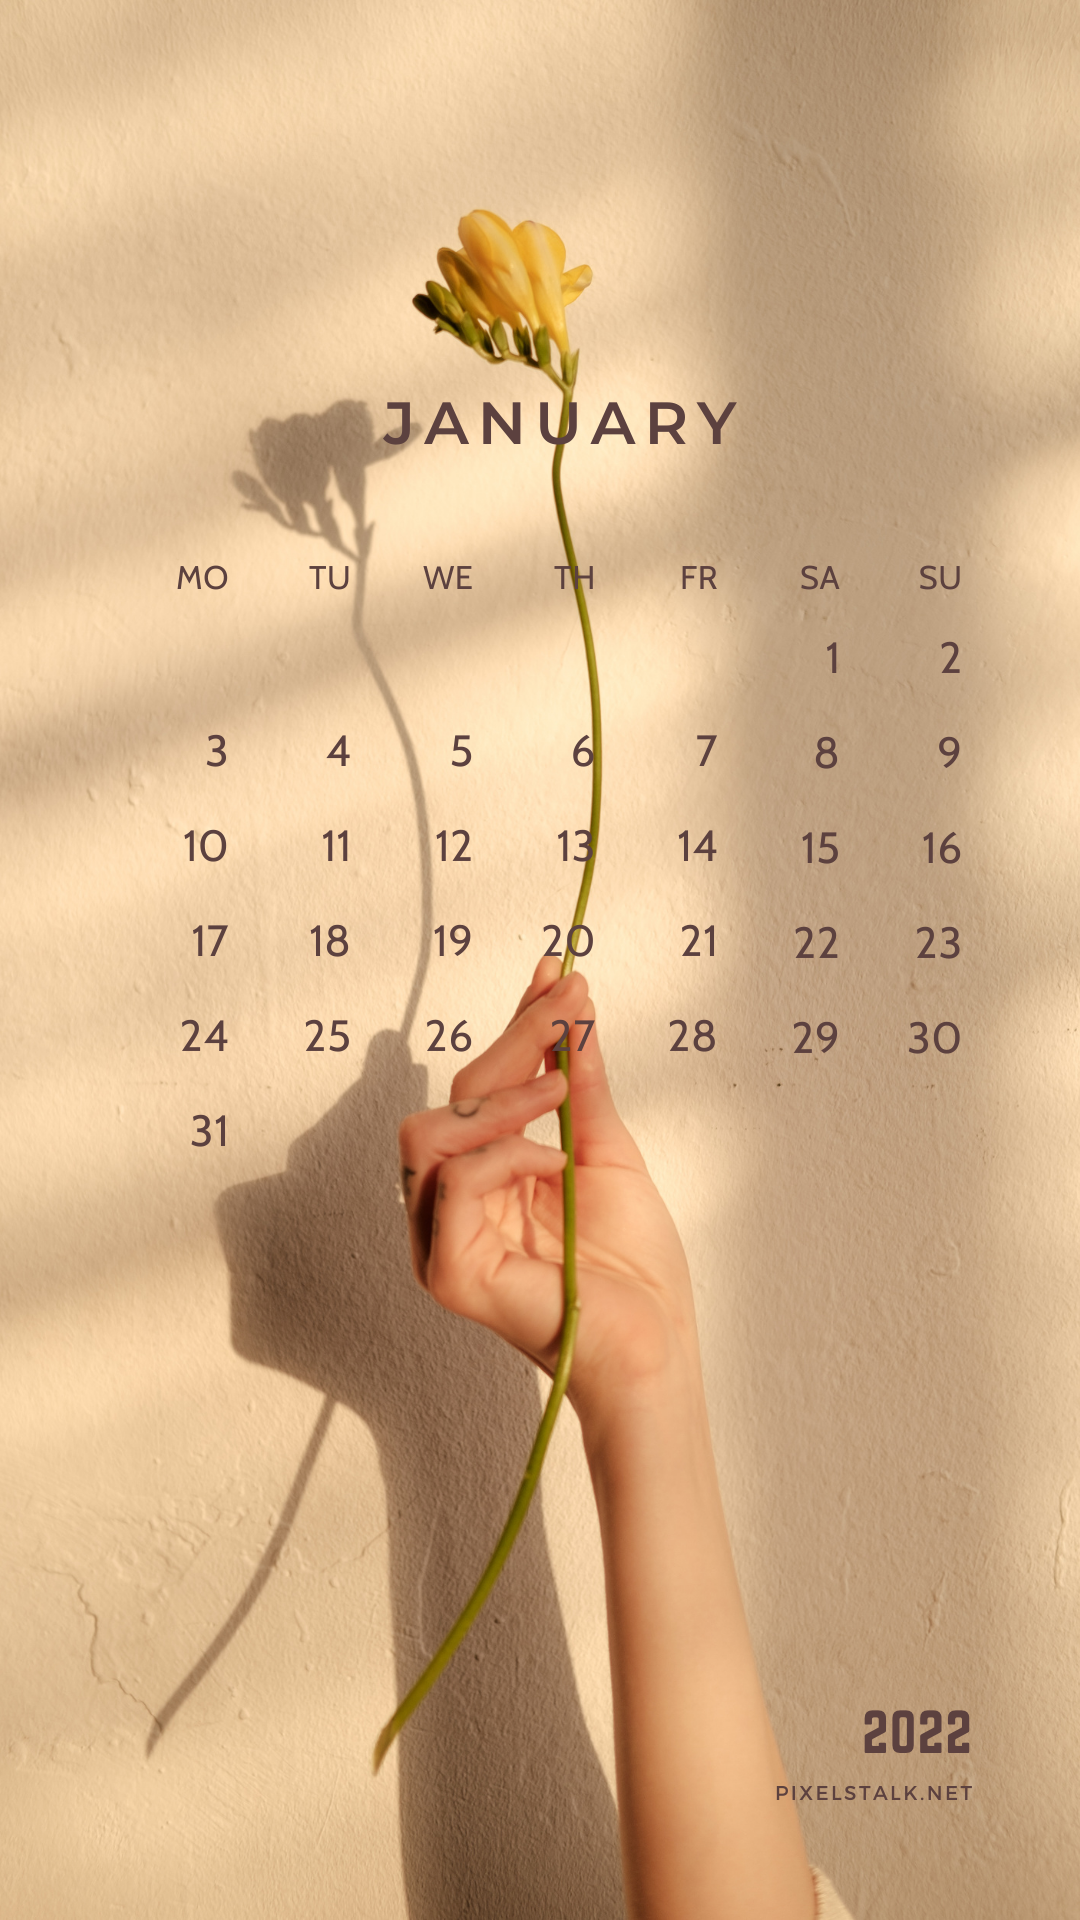 January 2022 Calendar Wallpaper Ipad.January 2022 Calendar Iphone Backgrounds Pixelstalk Net